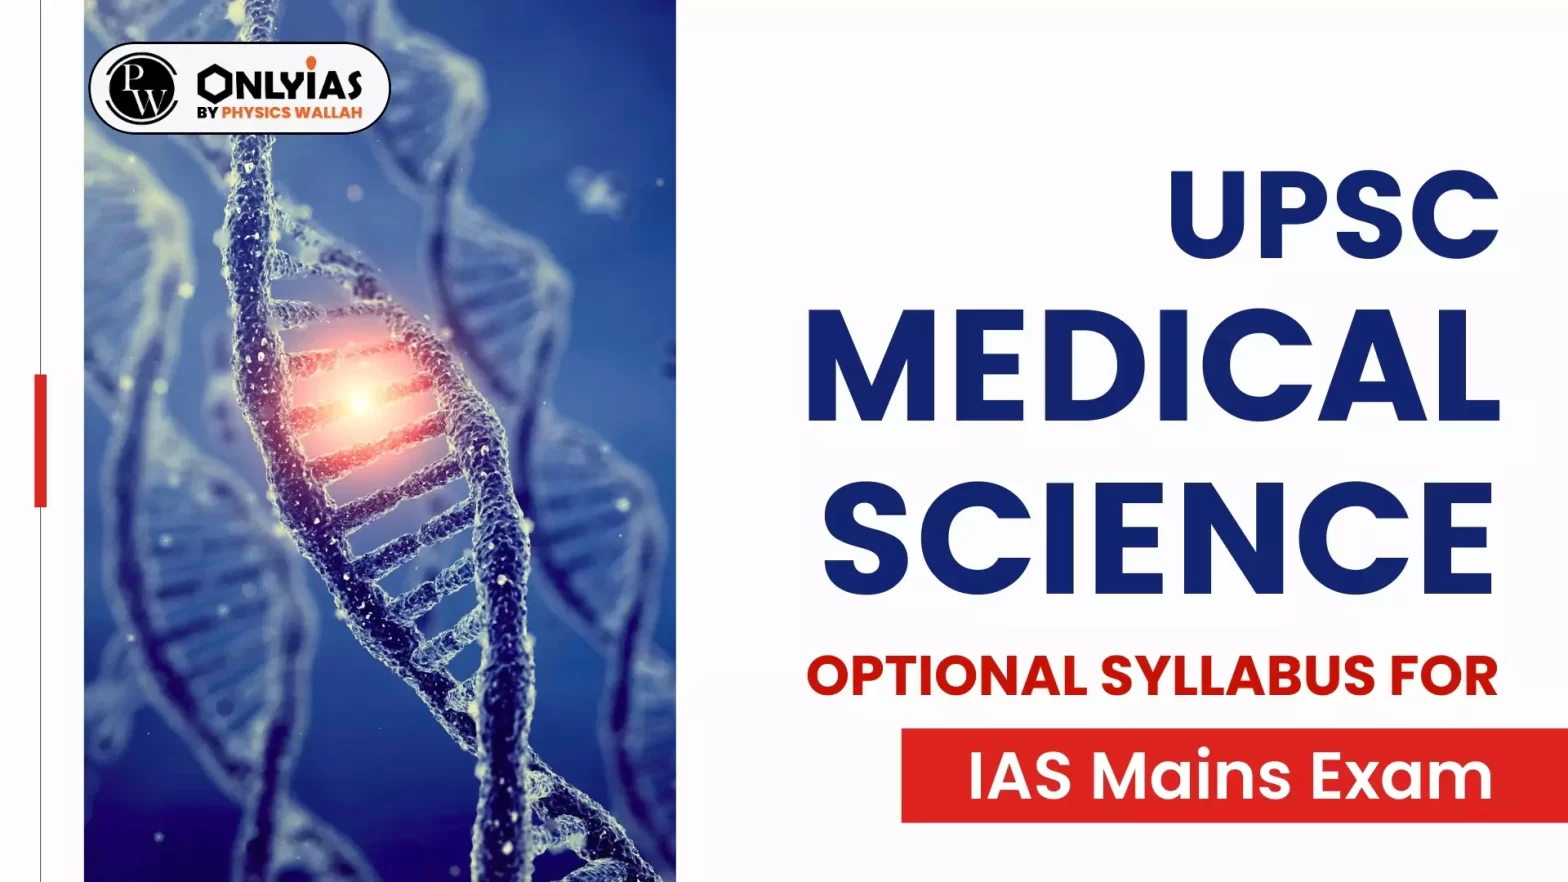 UPSC Medical Science Optional Syllabus For IAS Mains Exam